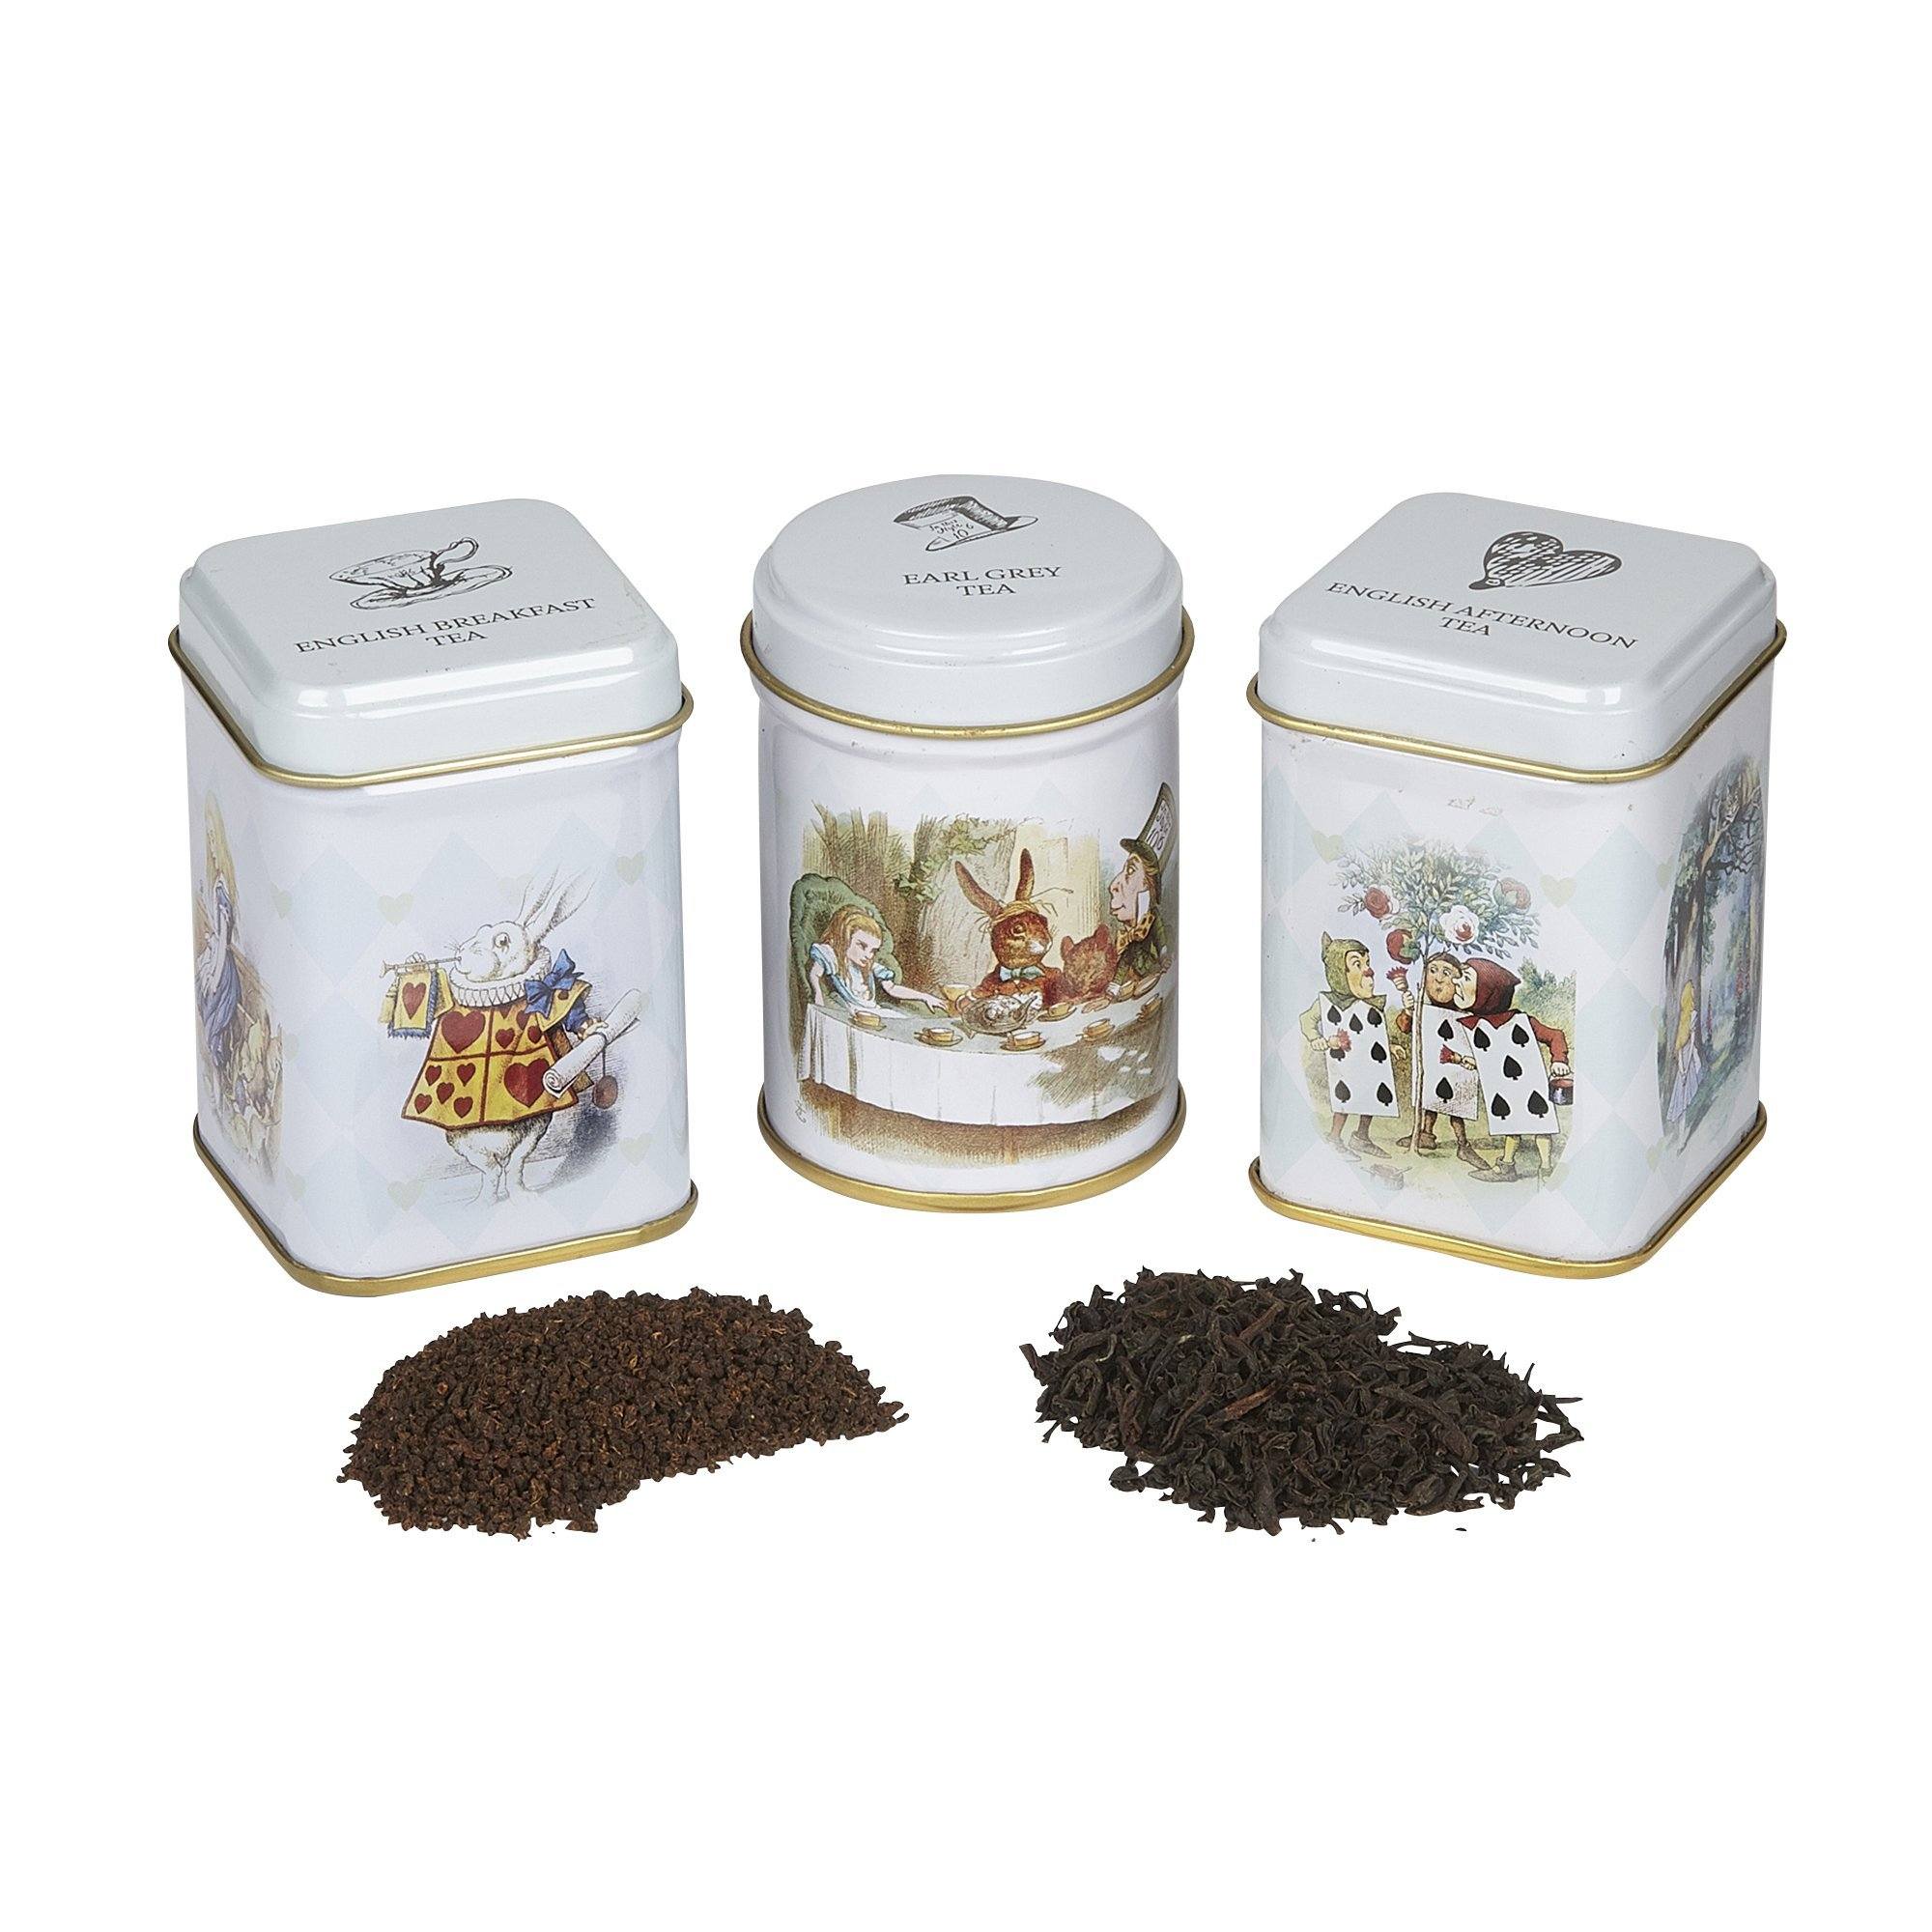 New English Teas Alice in Wonderland Triple Tea Selection Mini Tins Black Tea New English Teas 